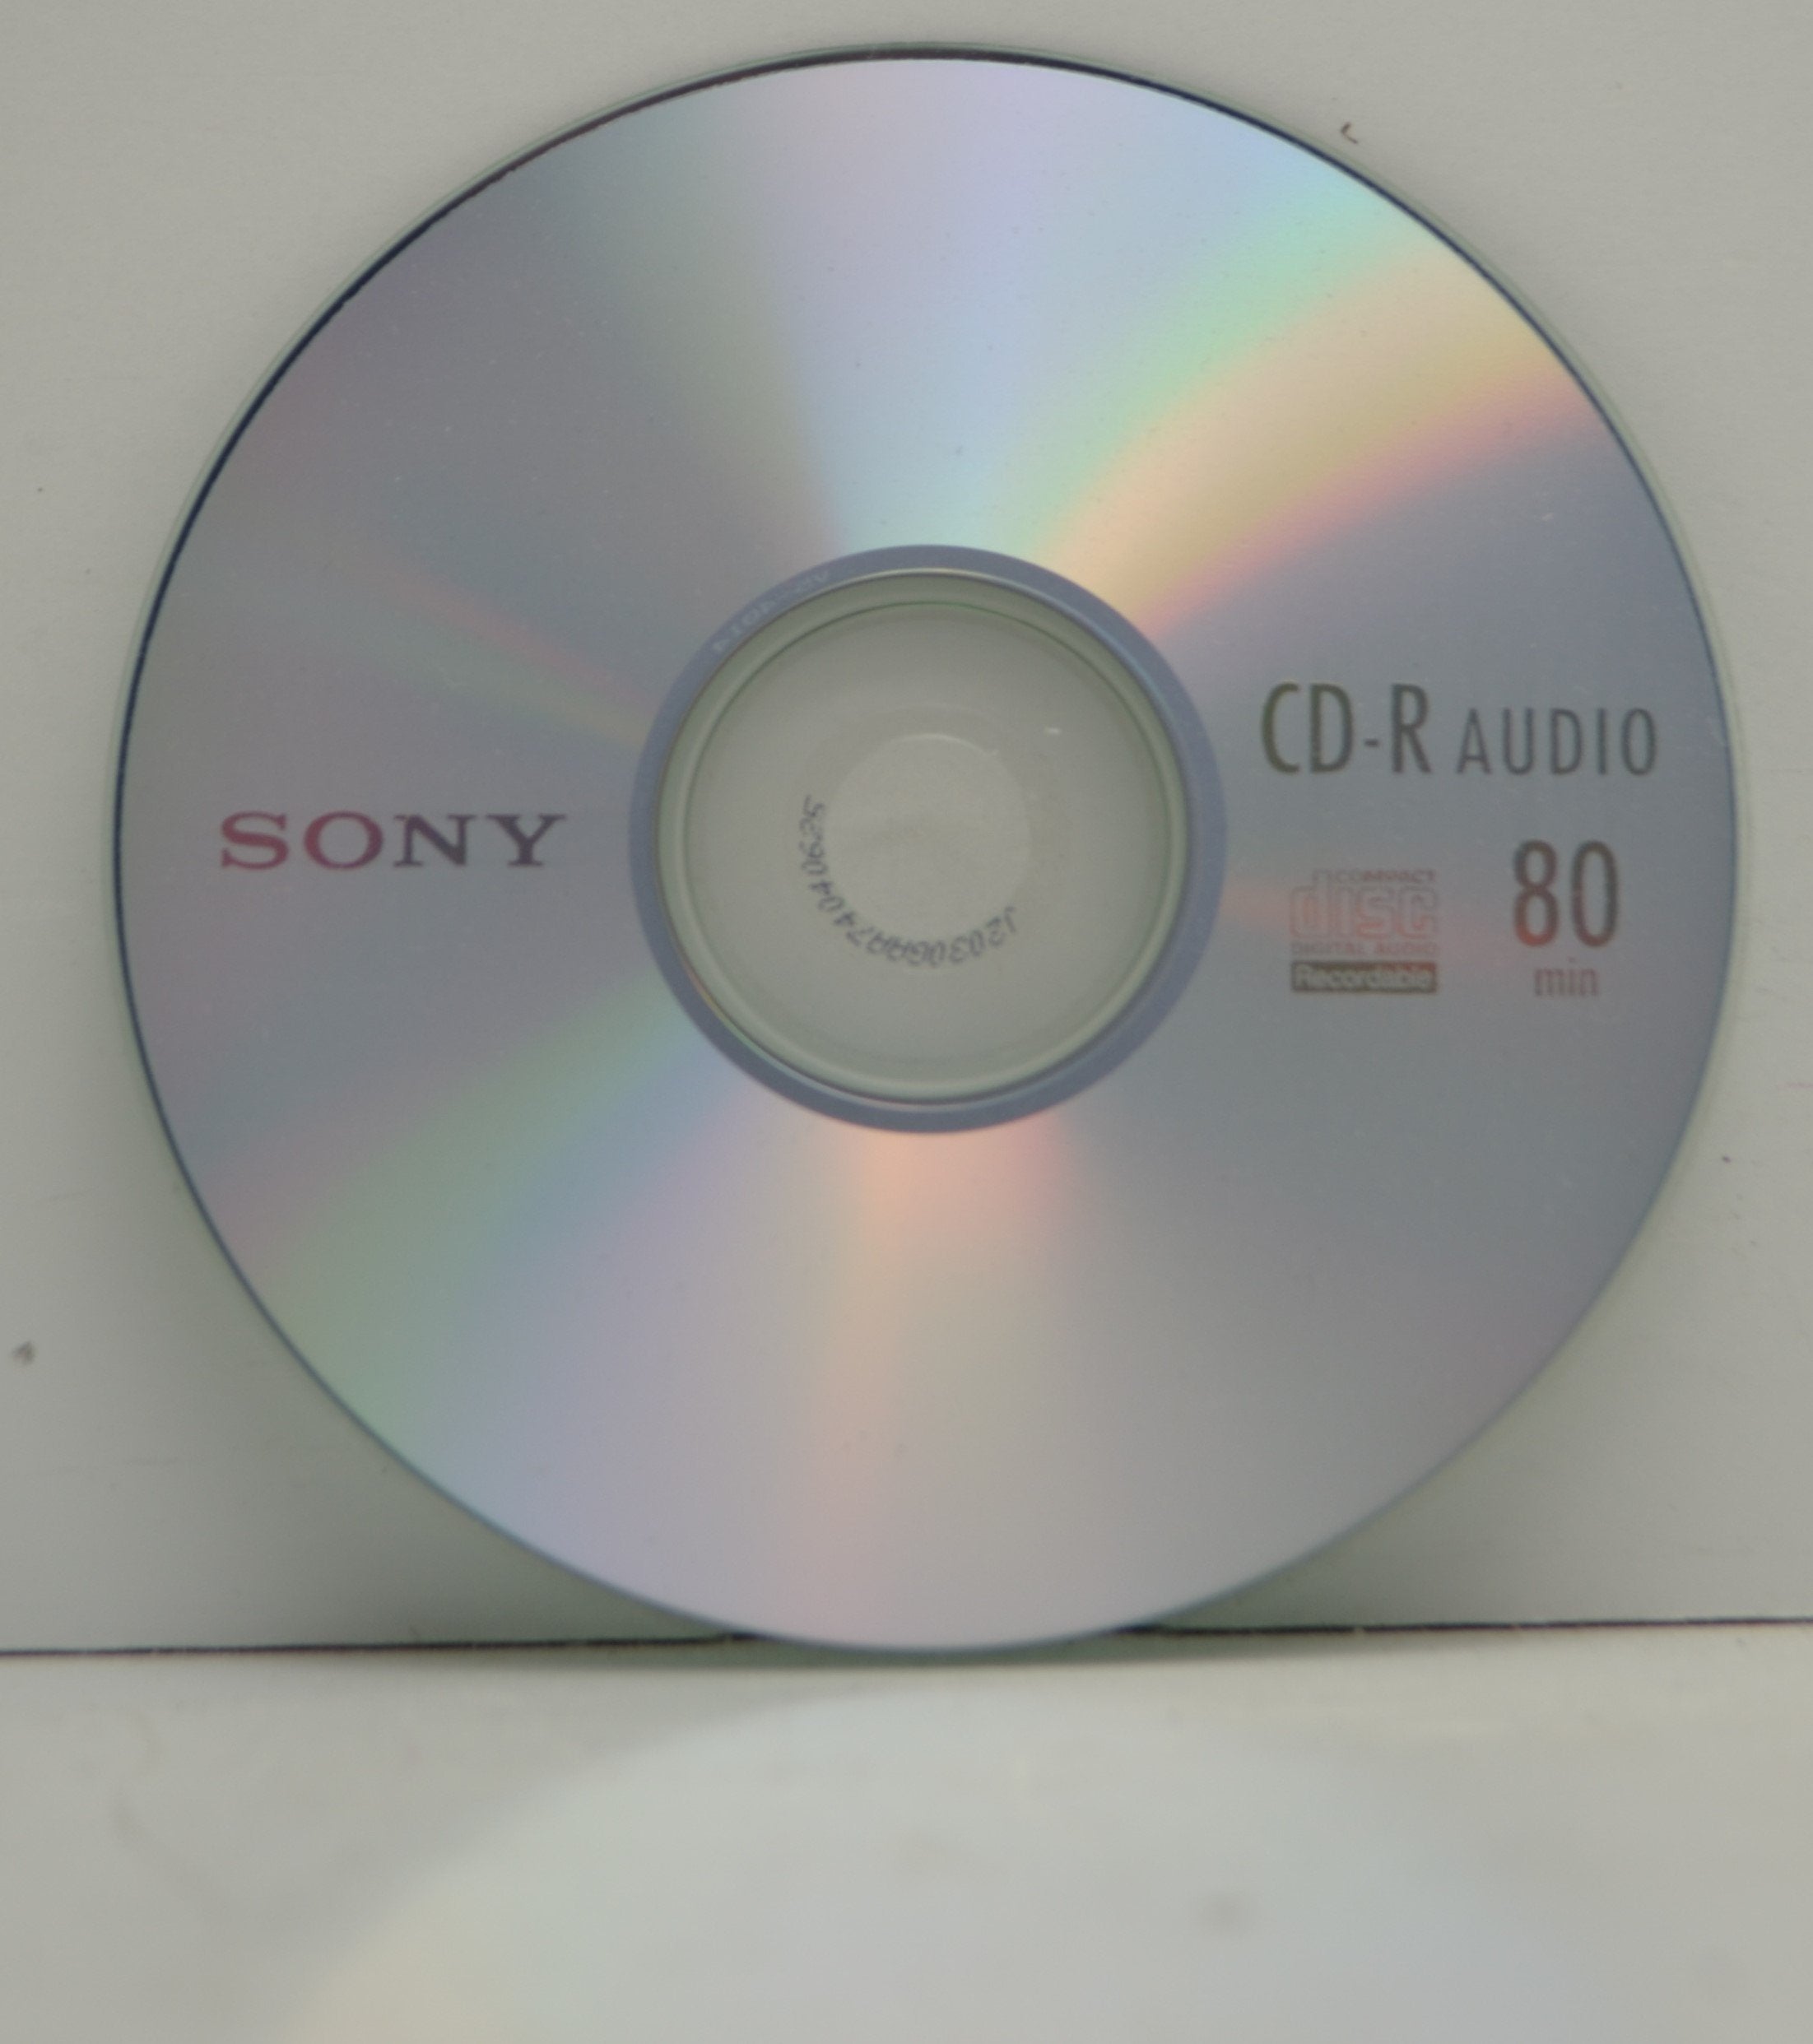 Compact Disc Digital Audio or Audio CD